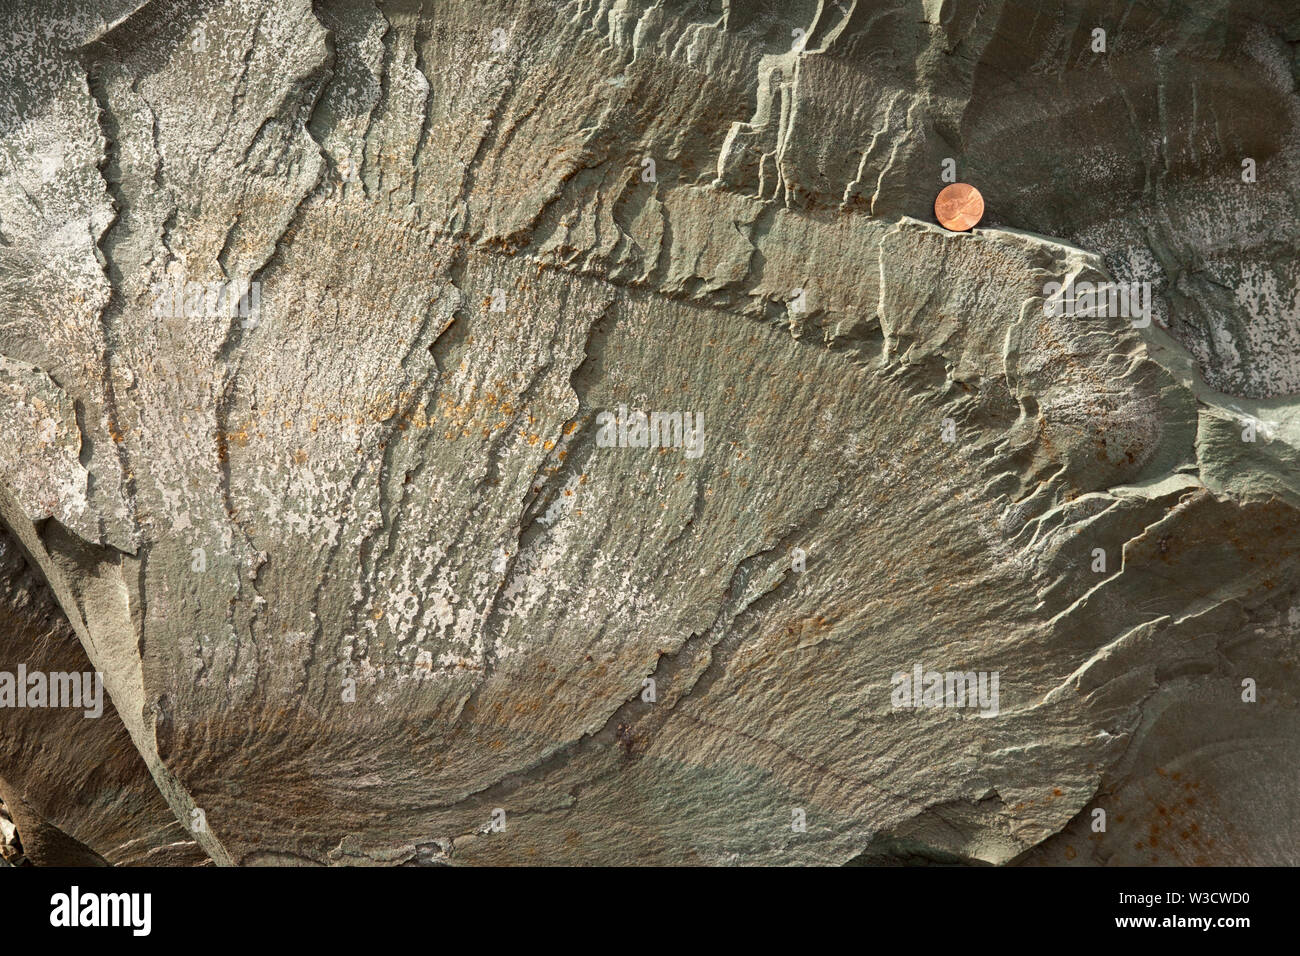 plumose fracture in argillite (slightly metamorphosed mudstone). Penny for scale. Stock Photo